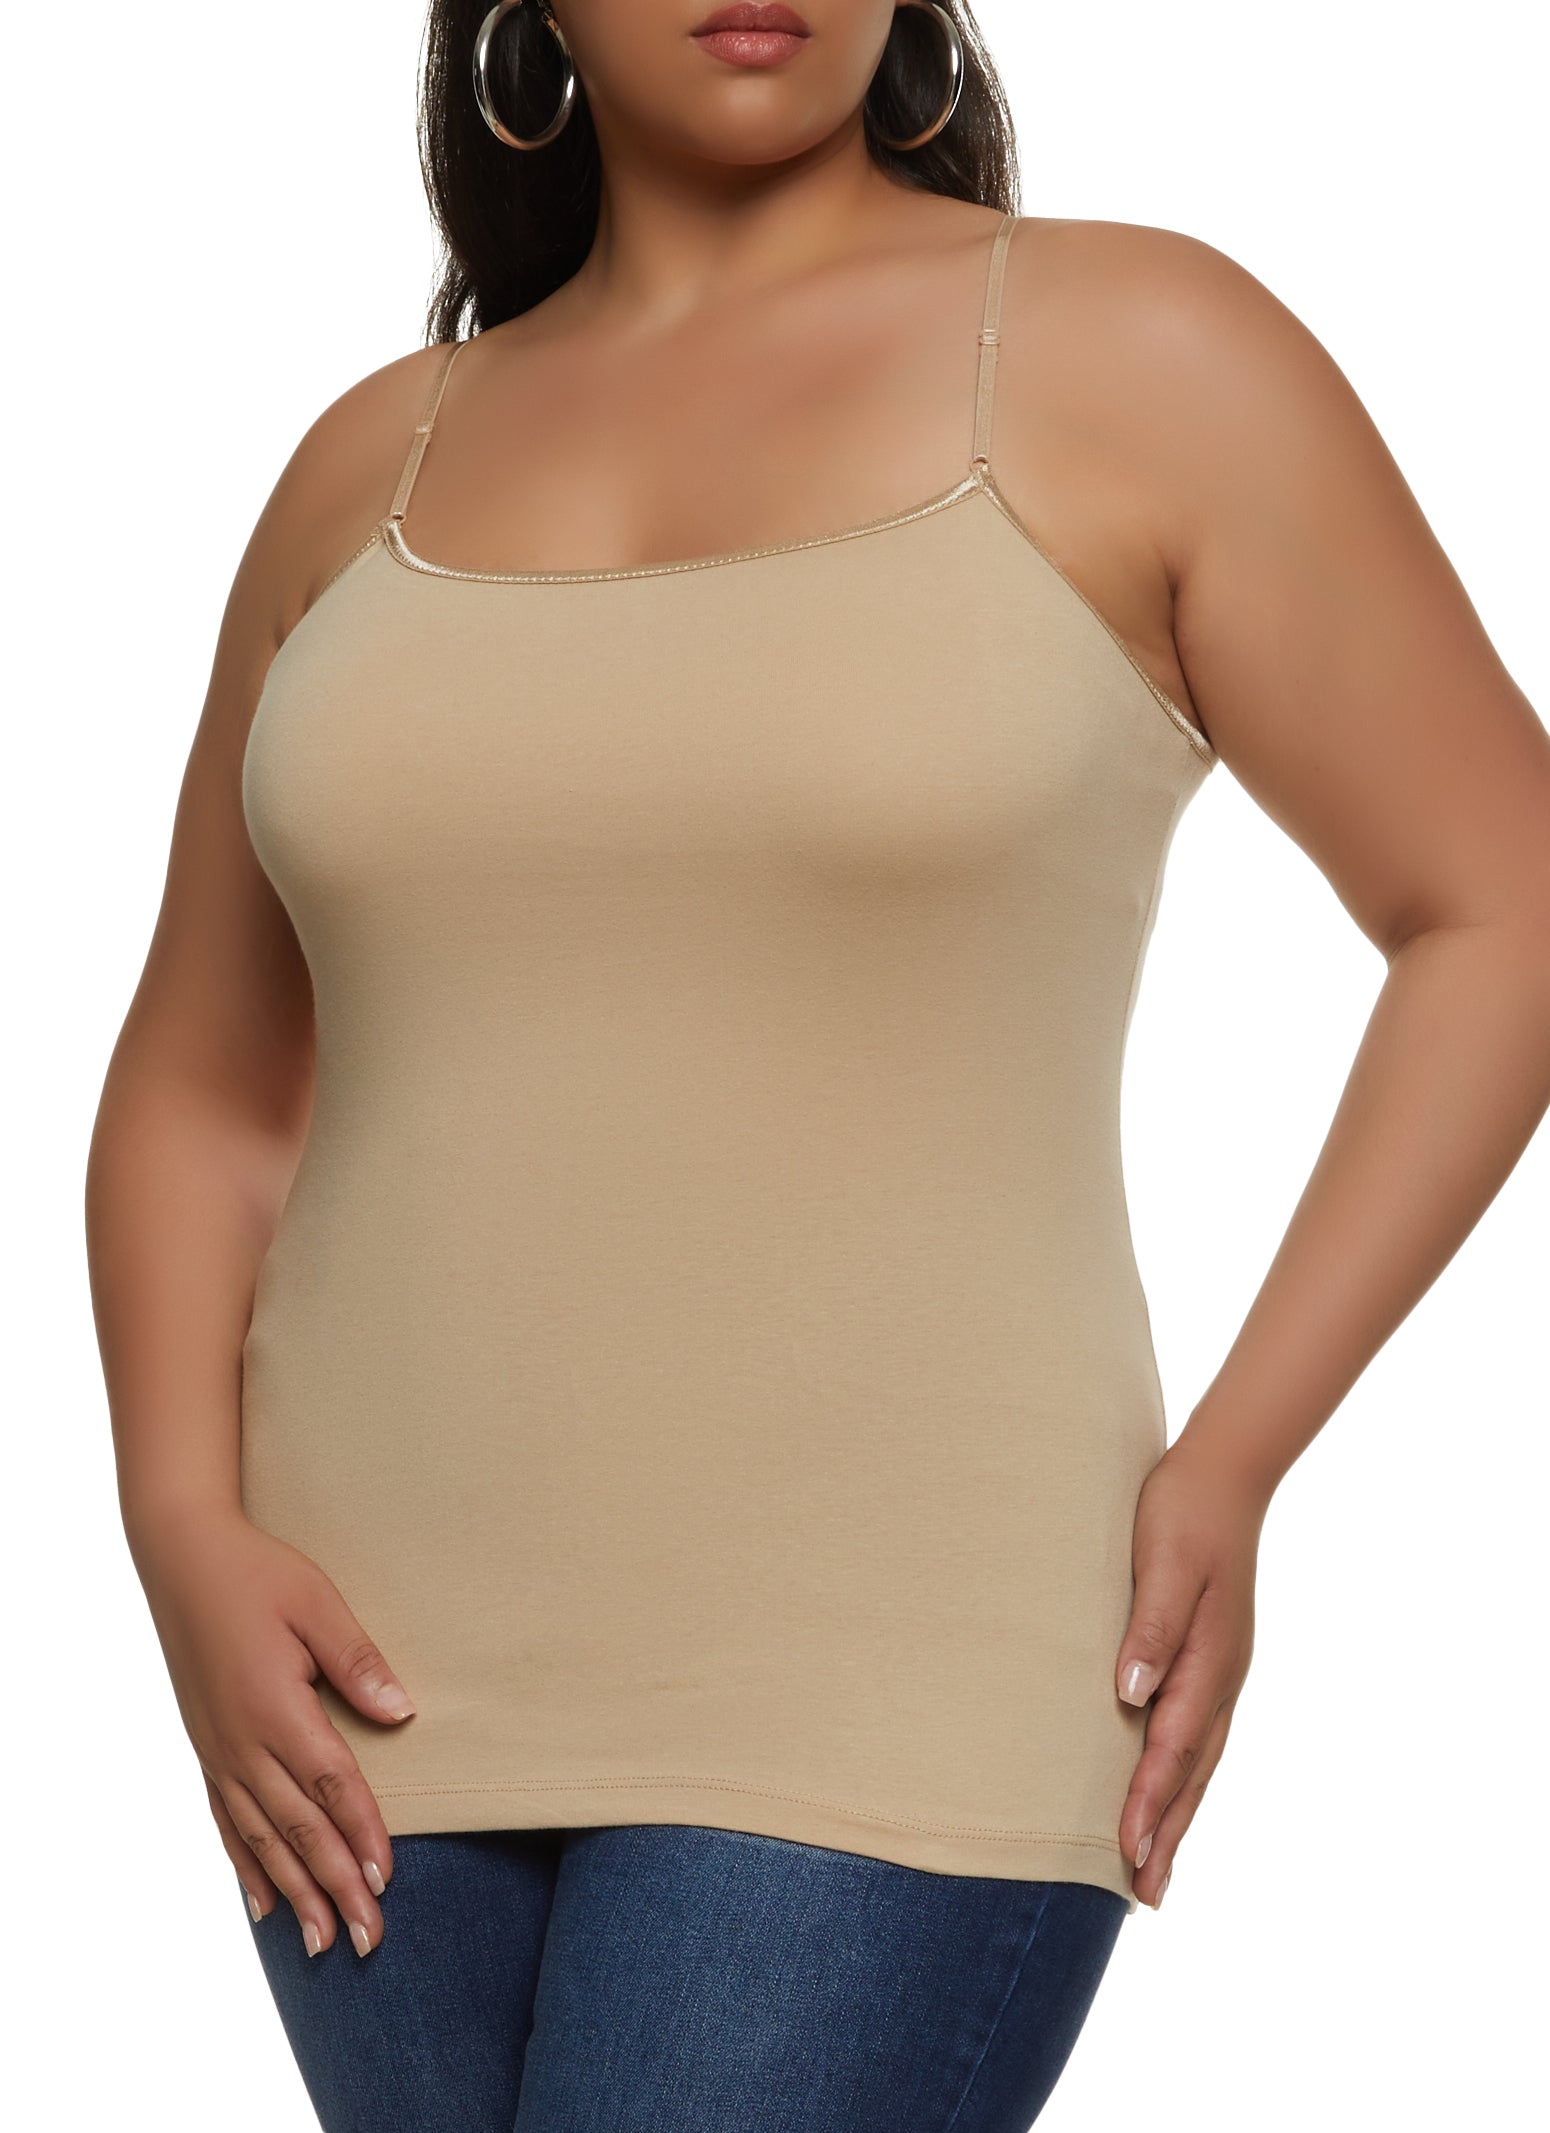 Womens Tank Tops Women's Plus Size Camisole Adjustable Strap